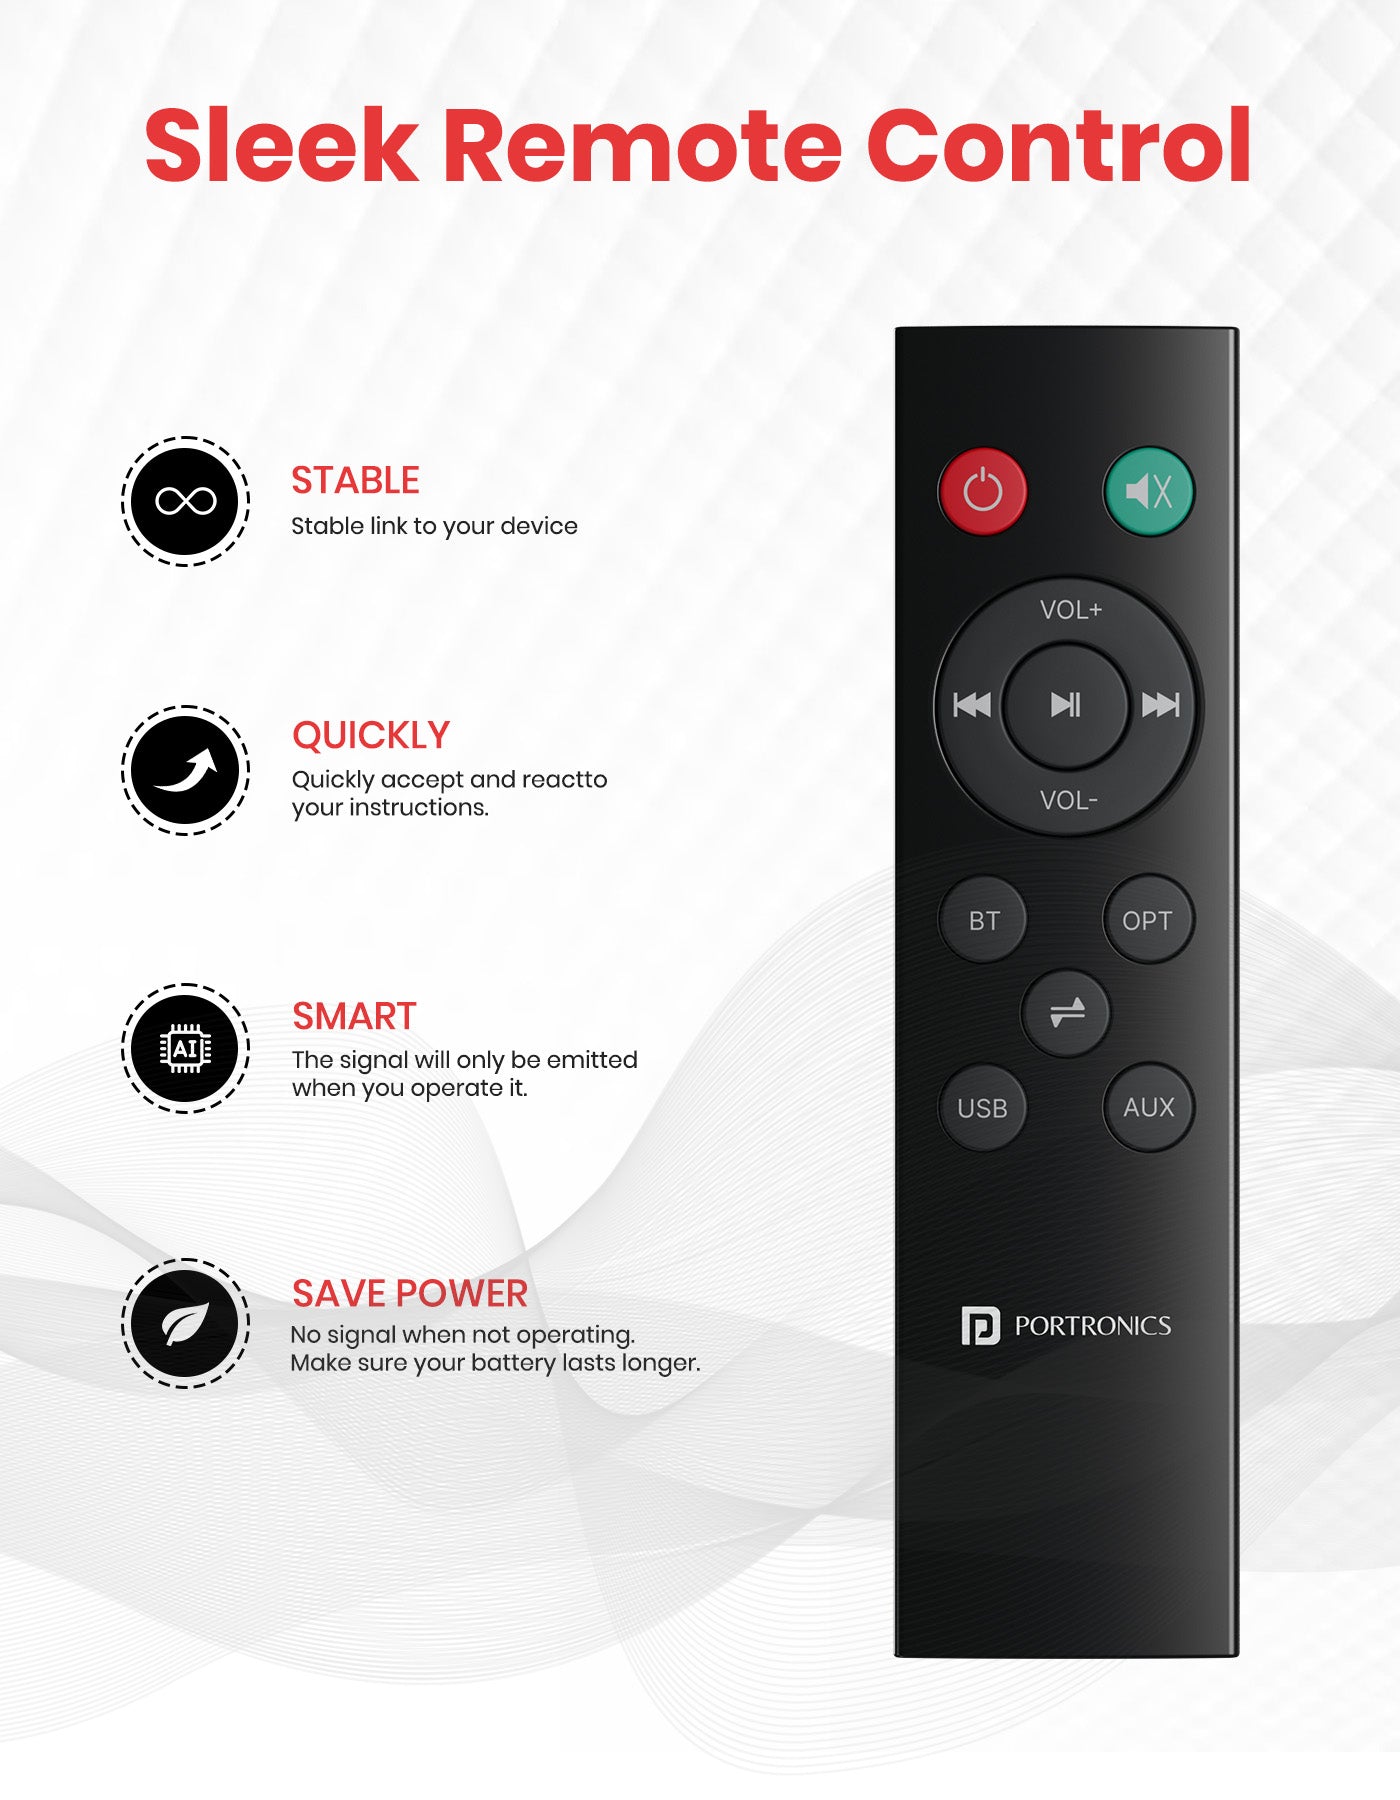 Portronics Pure Sound Pro X 80w soundbar with subwoofer comes with remote control